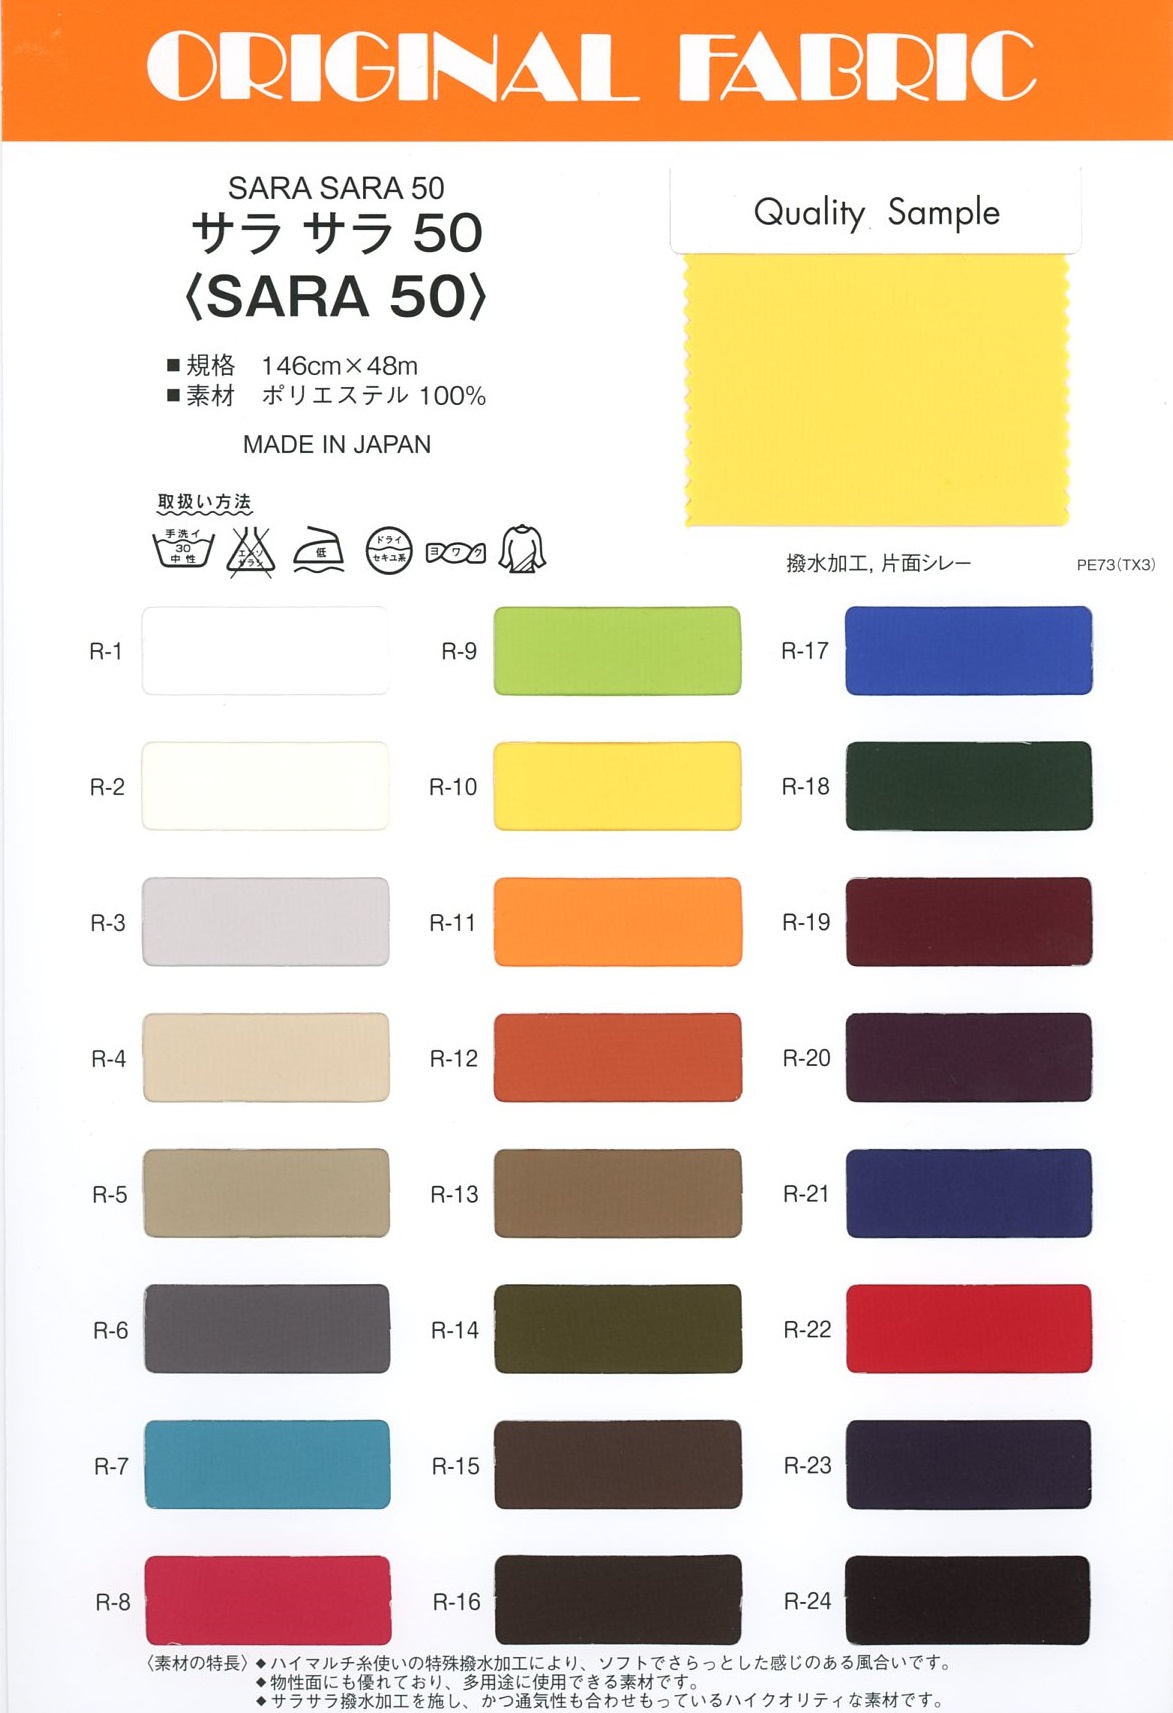 SARA50 Sara Sara 50[Fabrication De Textile] Masuda